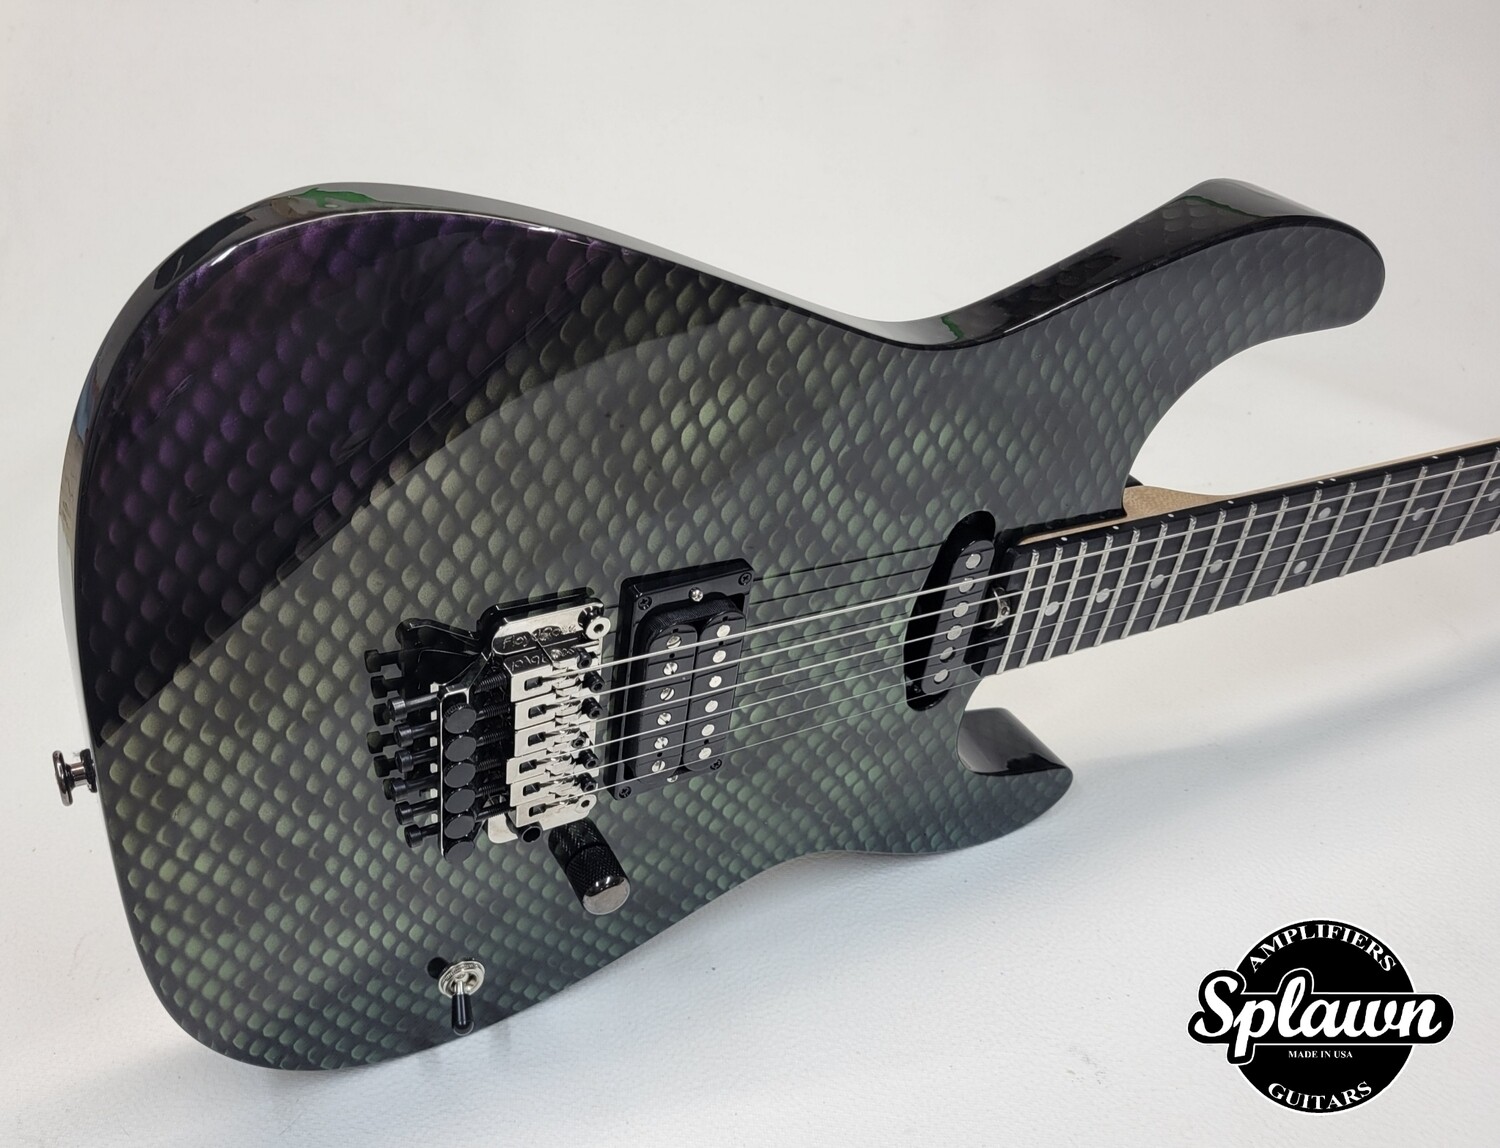 Splawn SS2 Guitar Color Shift Snakeskin Purple to Green